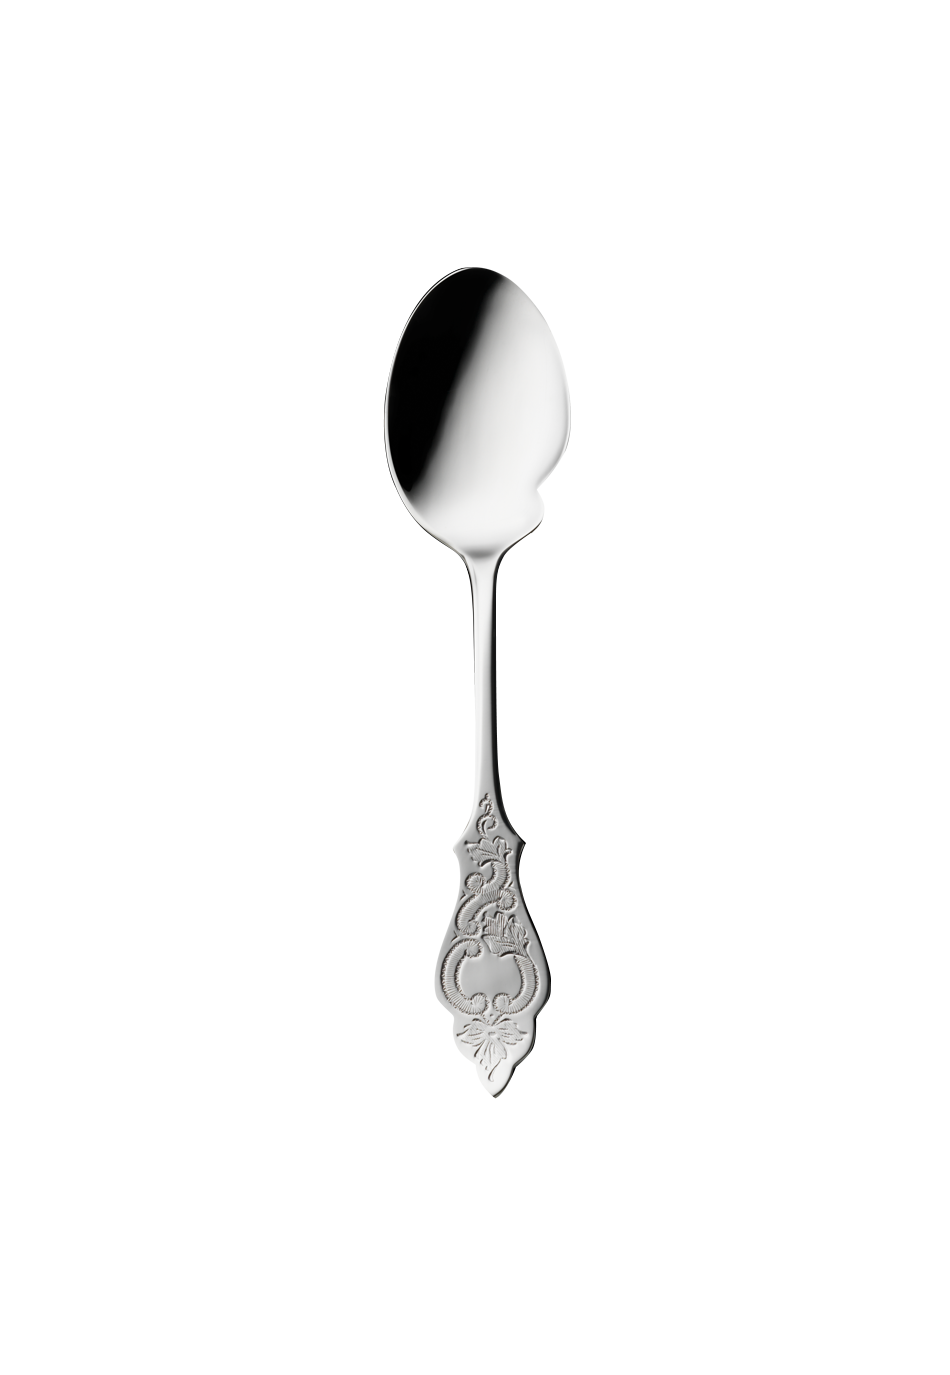 Ostfriesen Gourmet spoon (150g massive silverplated)